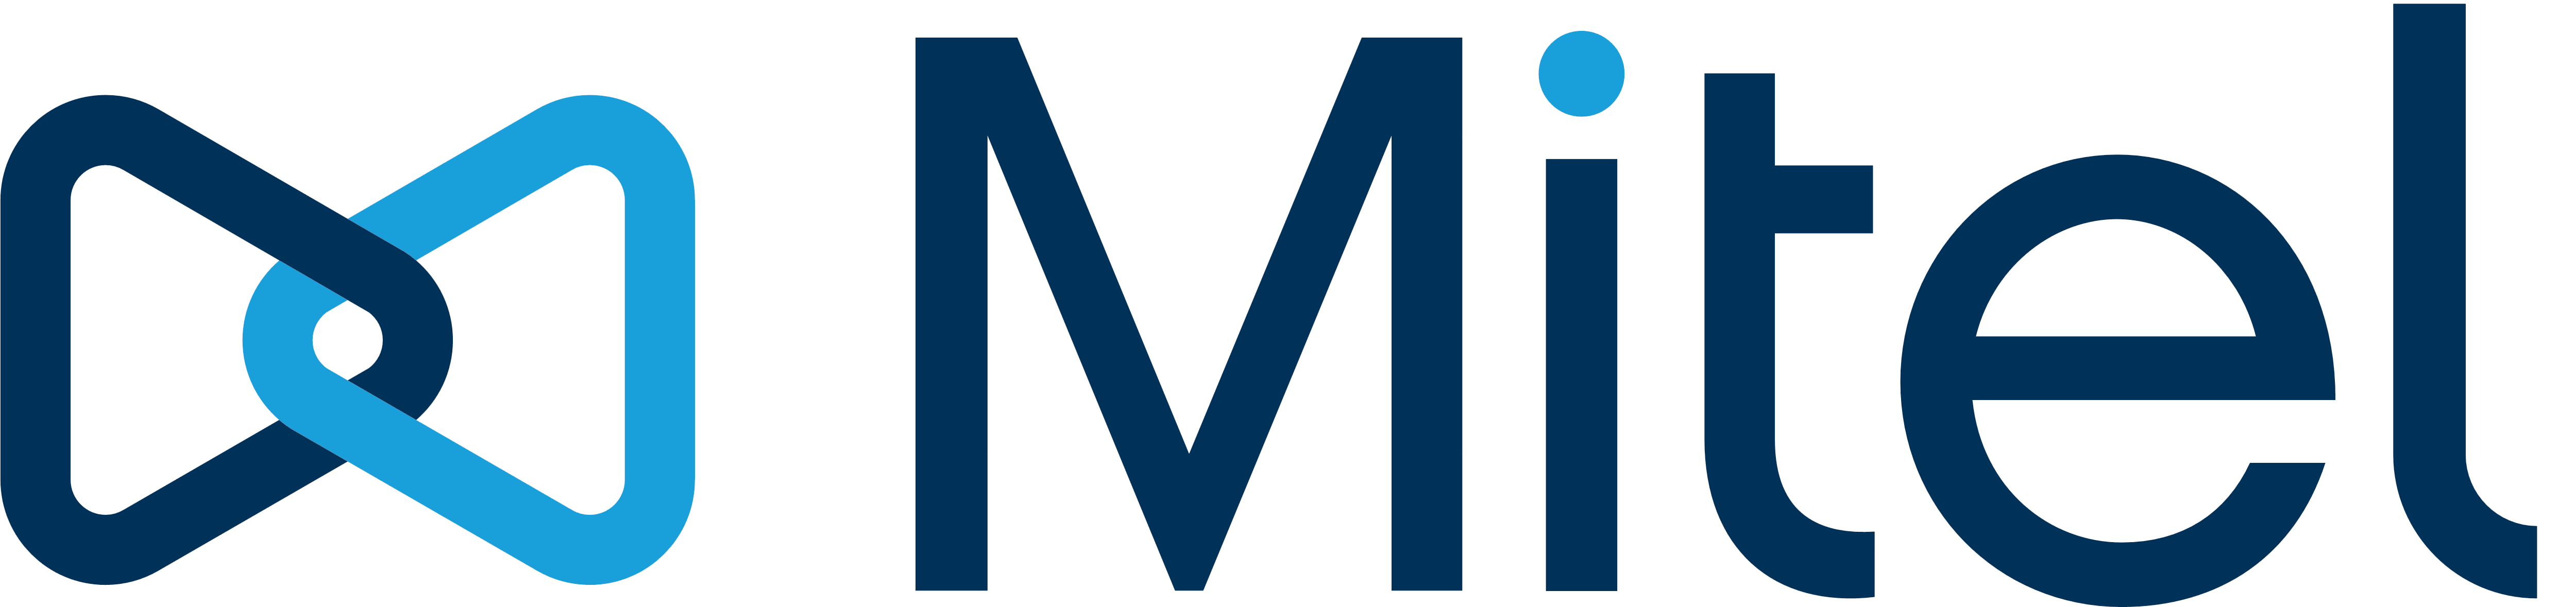 New Mitel Logo - Mitel – Logos Download